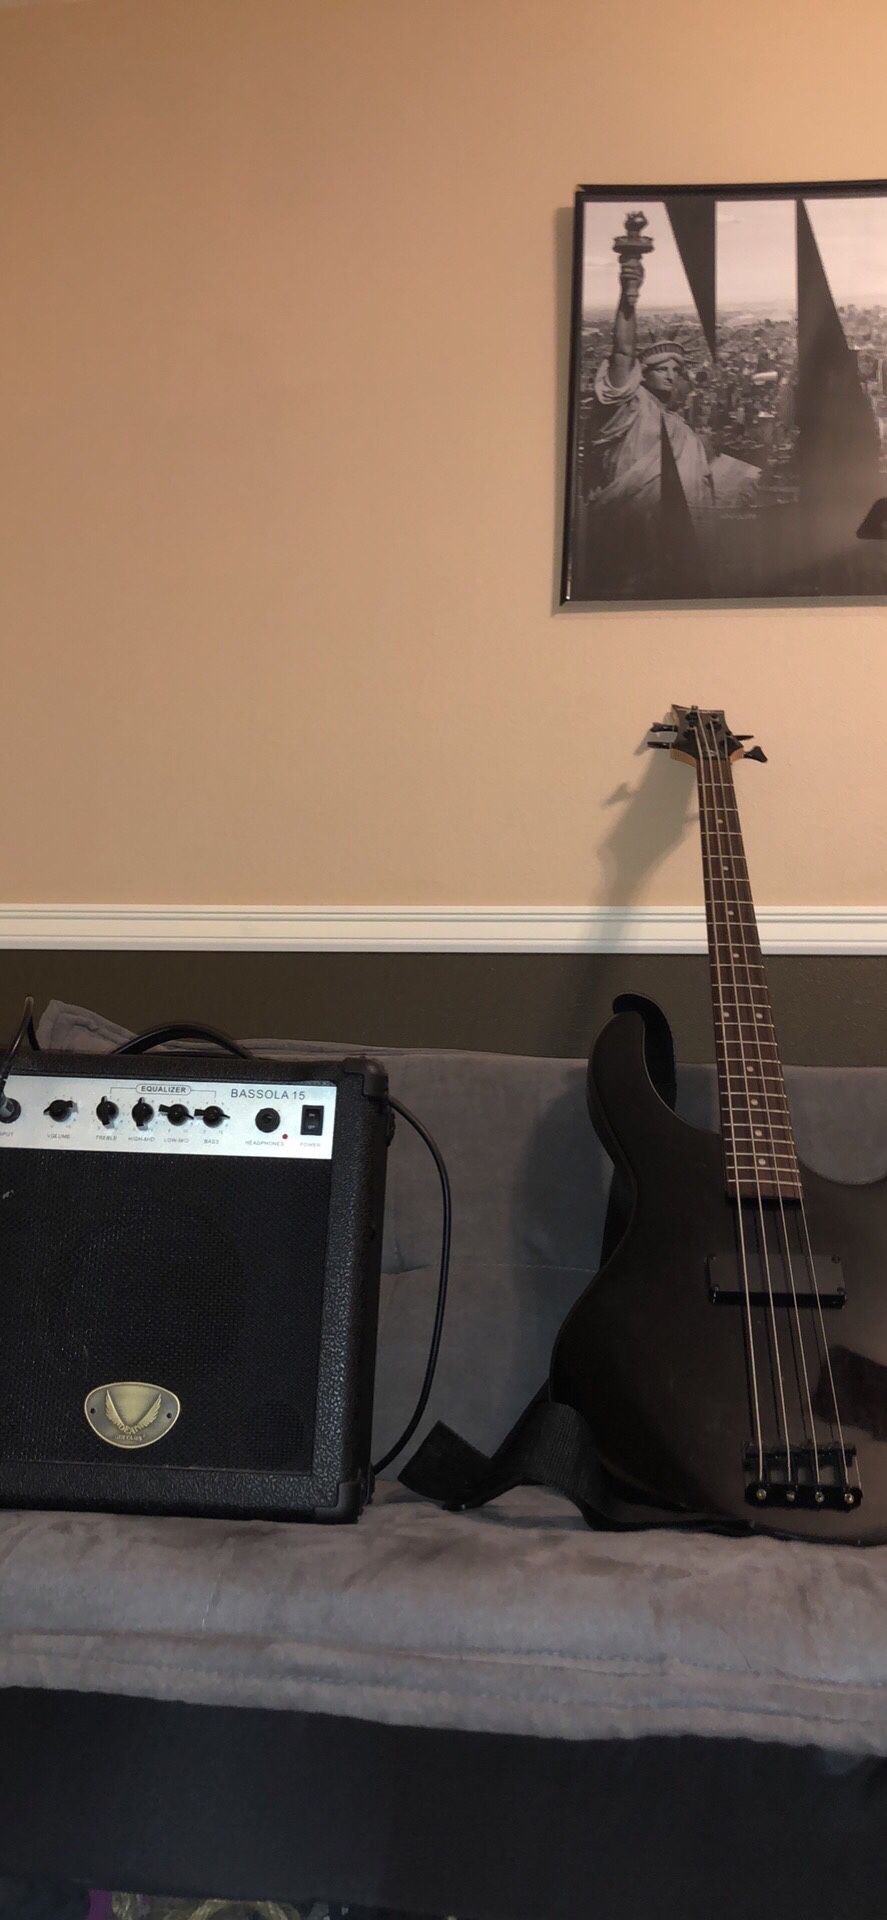 Bass guitar with amp